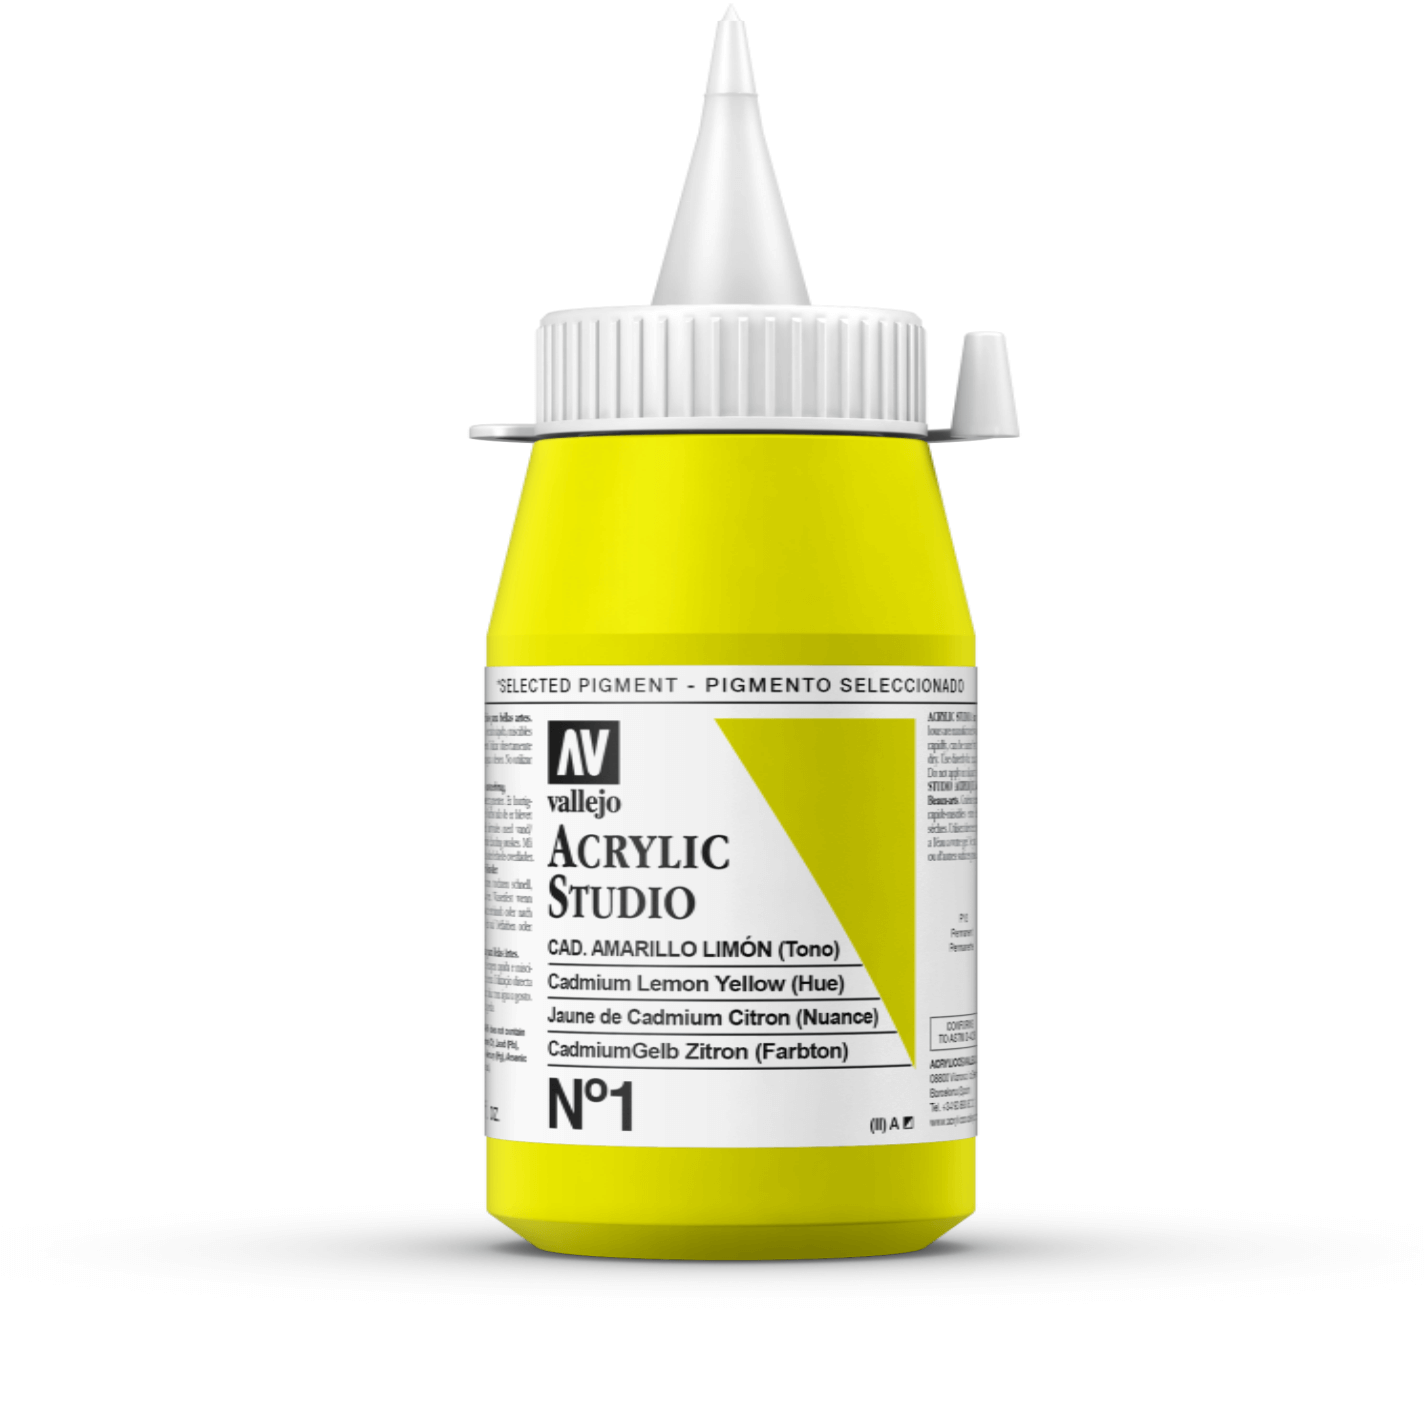 Vallejo Studio 500ml Cadmium Lemon Yellow (Hue)